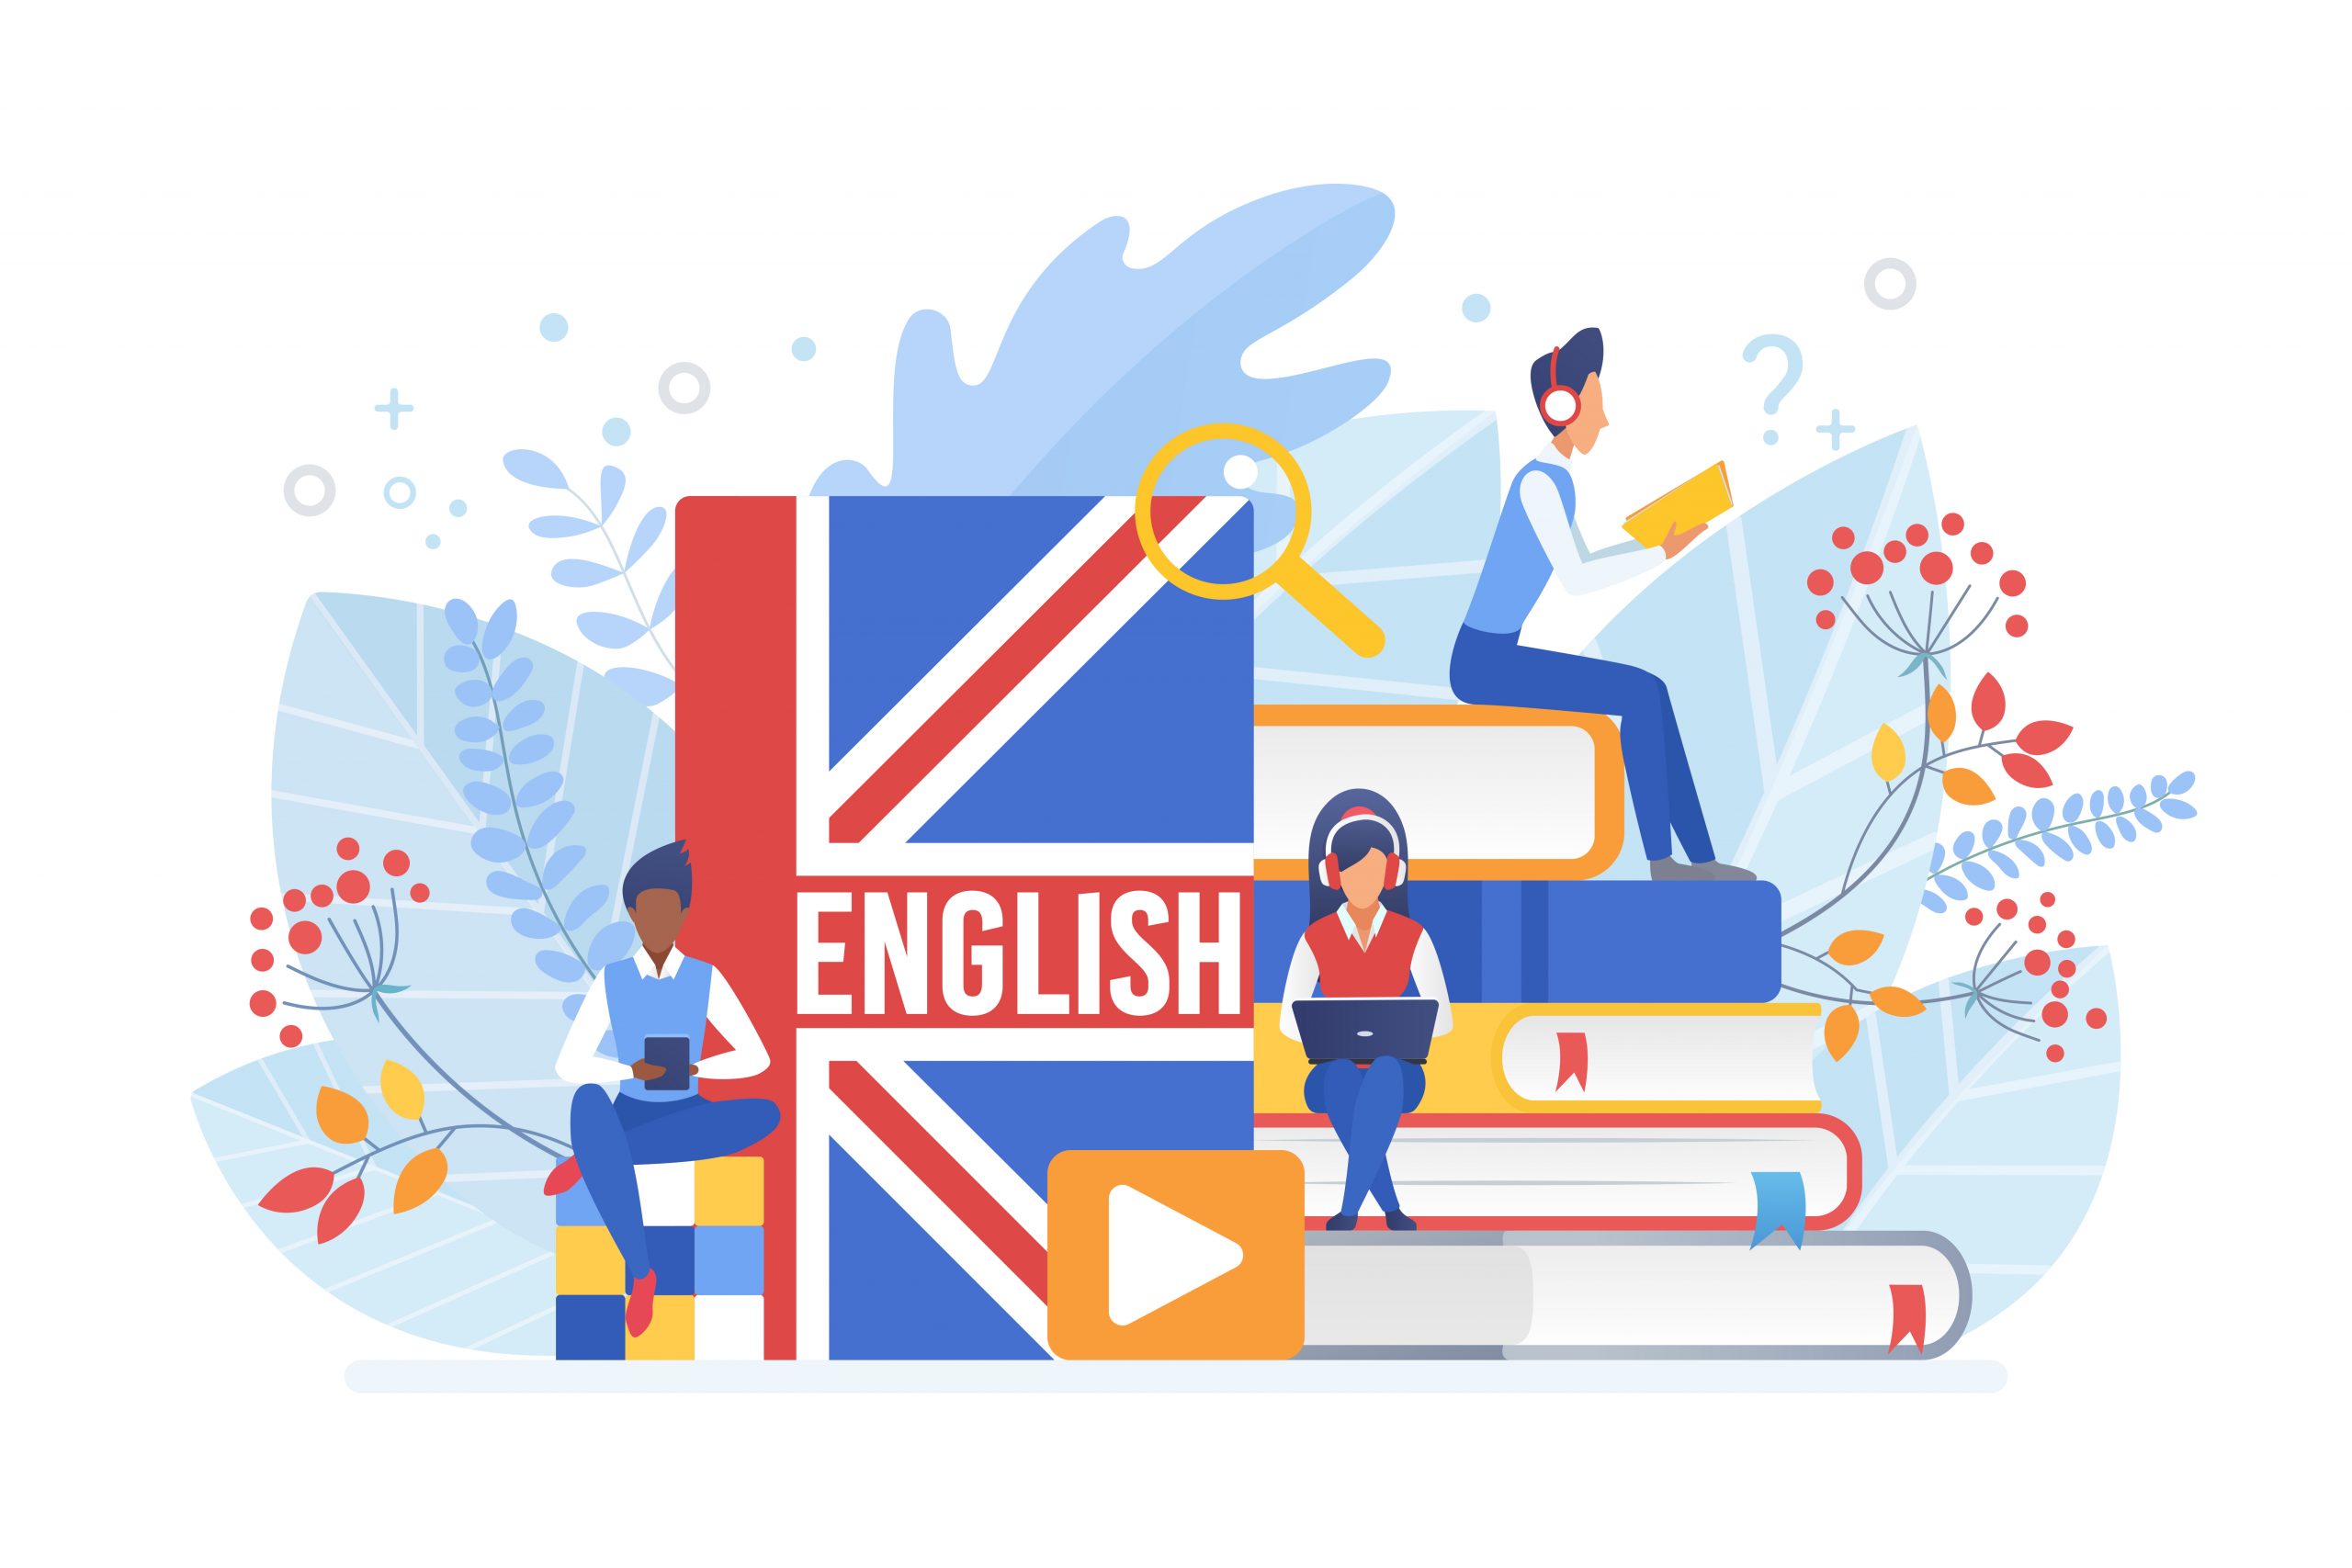 Tudo sobre ingles - Ensino de Língua Inglesa